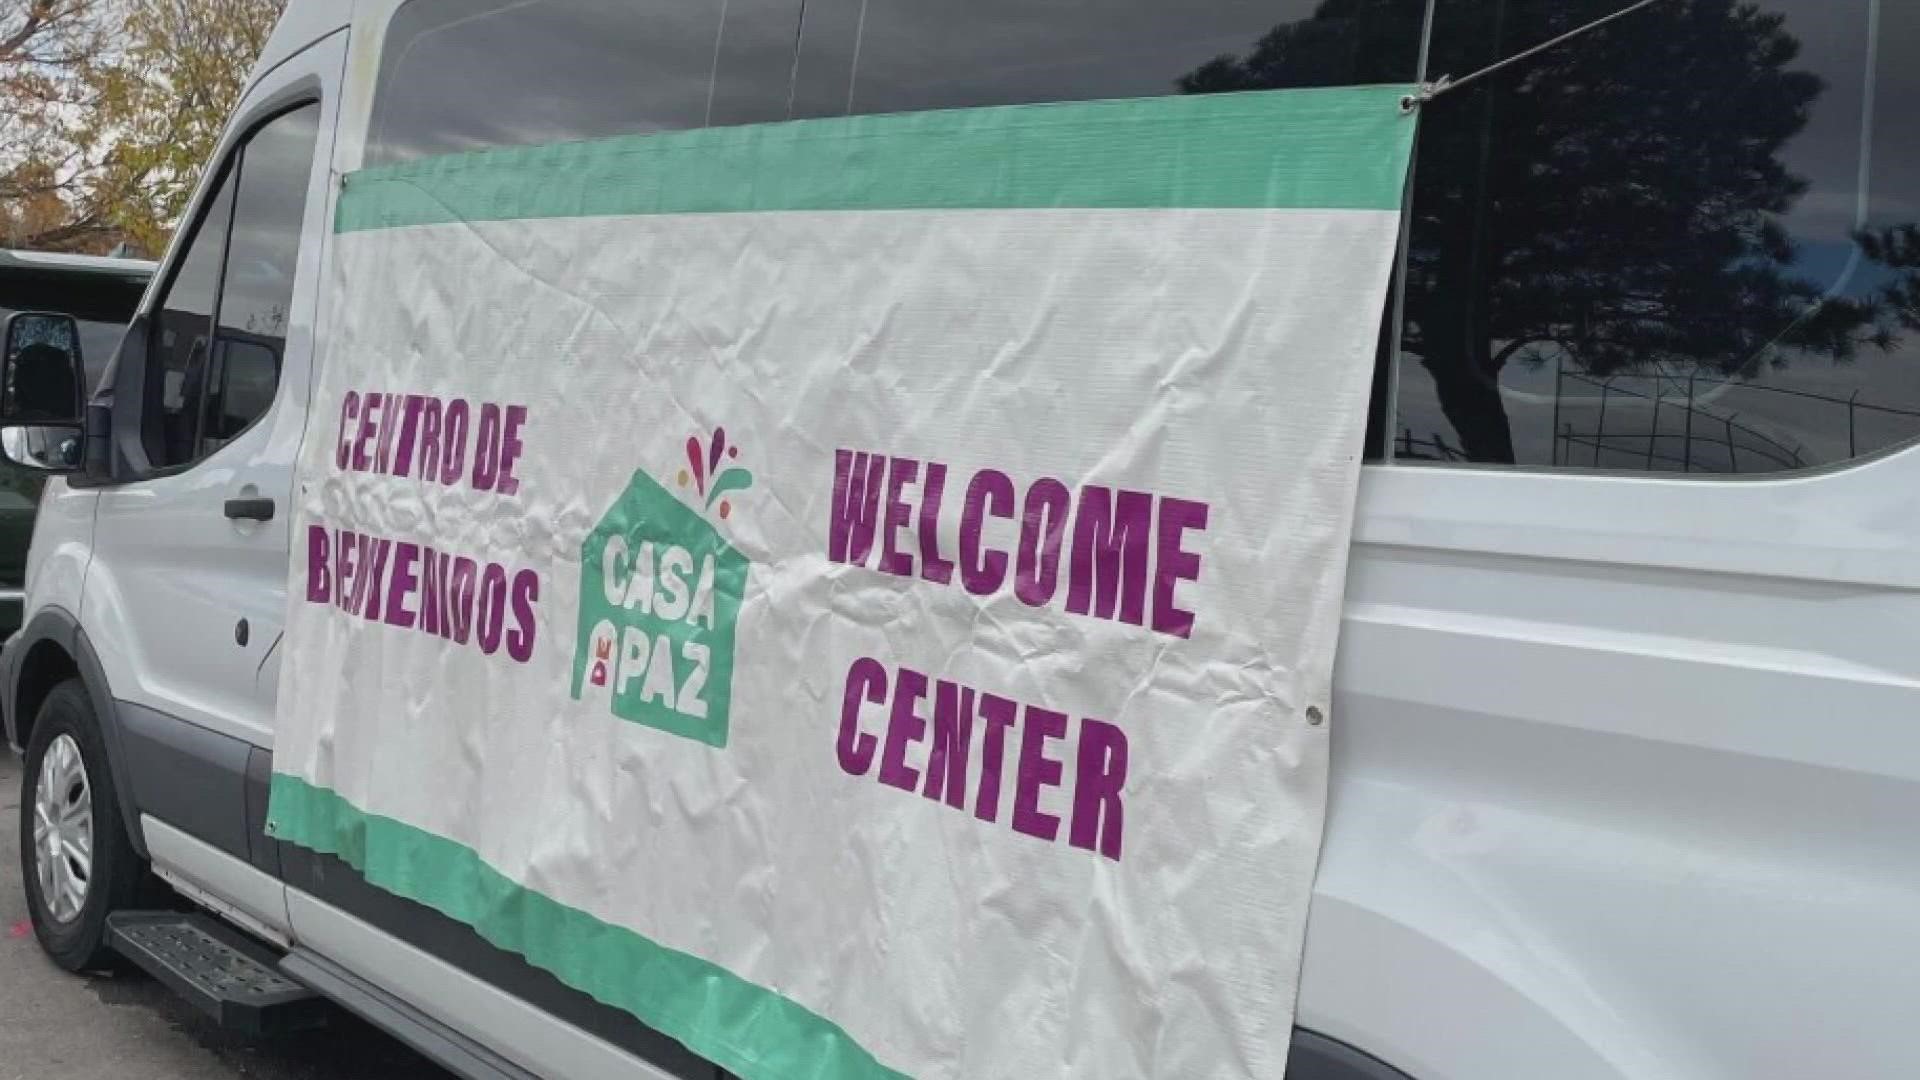 Casa de Paz is doing what it can to help migrants.